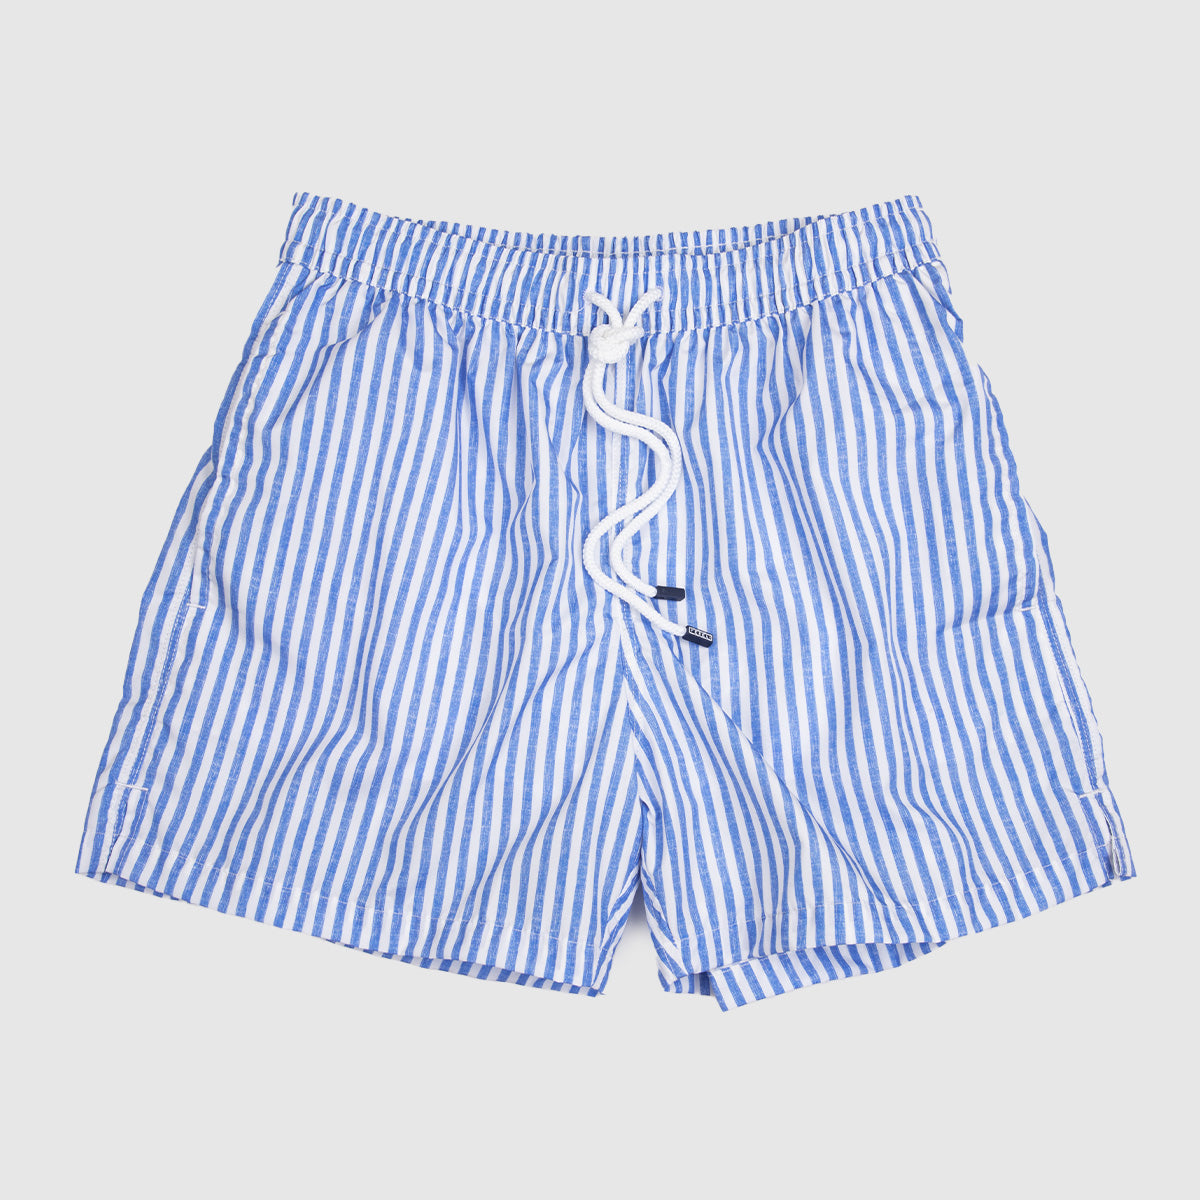 Madeira Printed Swim Trunk Stripes - White Navy